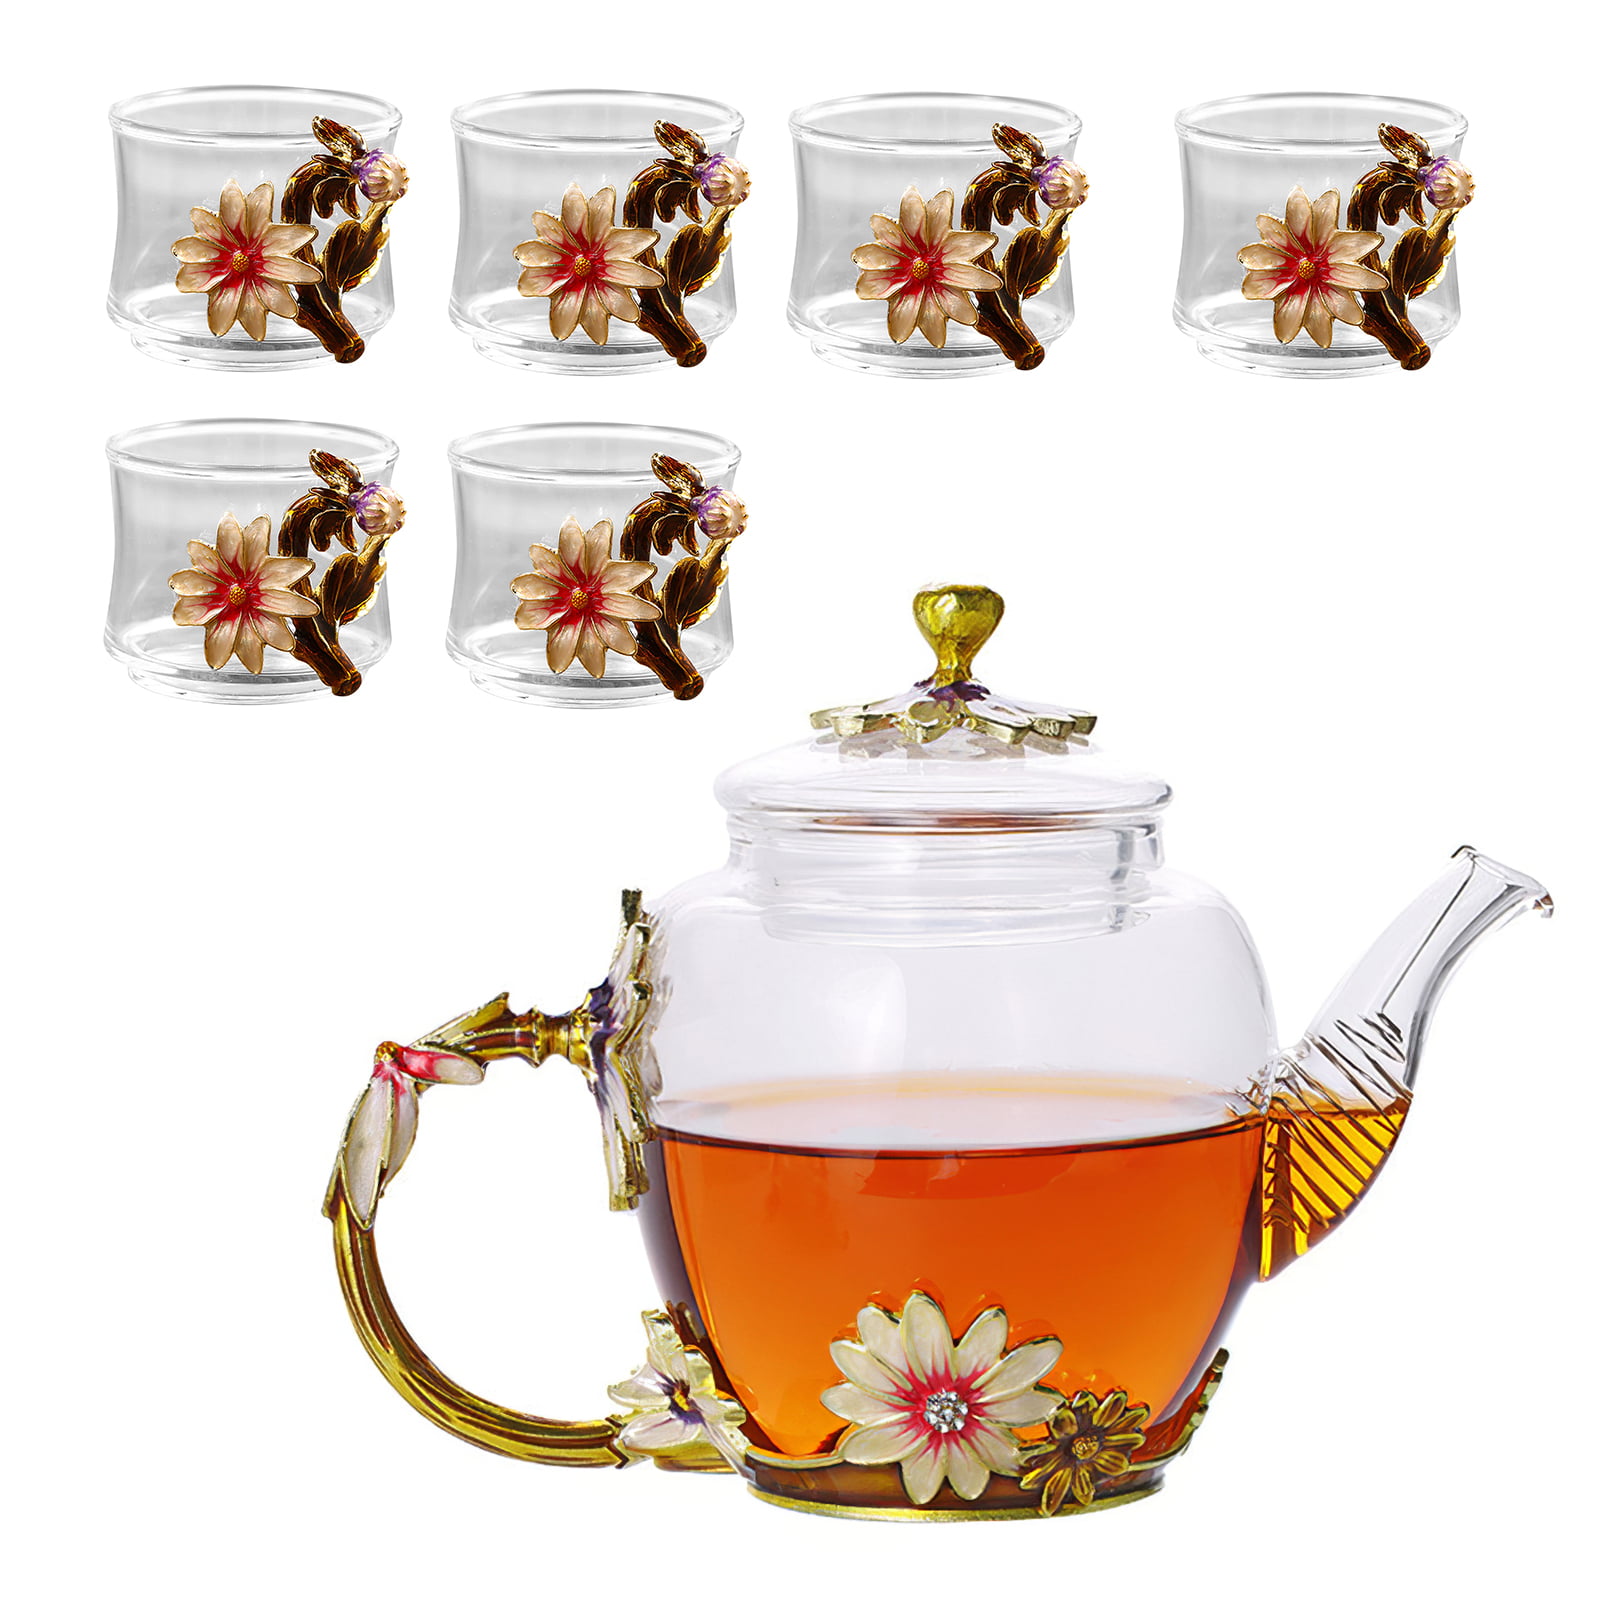 Luxury Teapot Restaurant Breakfast Teapot Enamel Teapot Tea Strainer Cafe